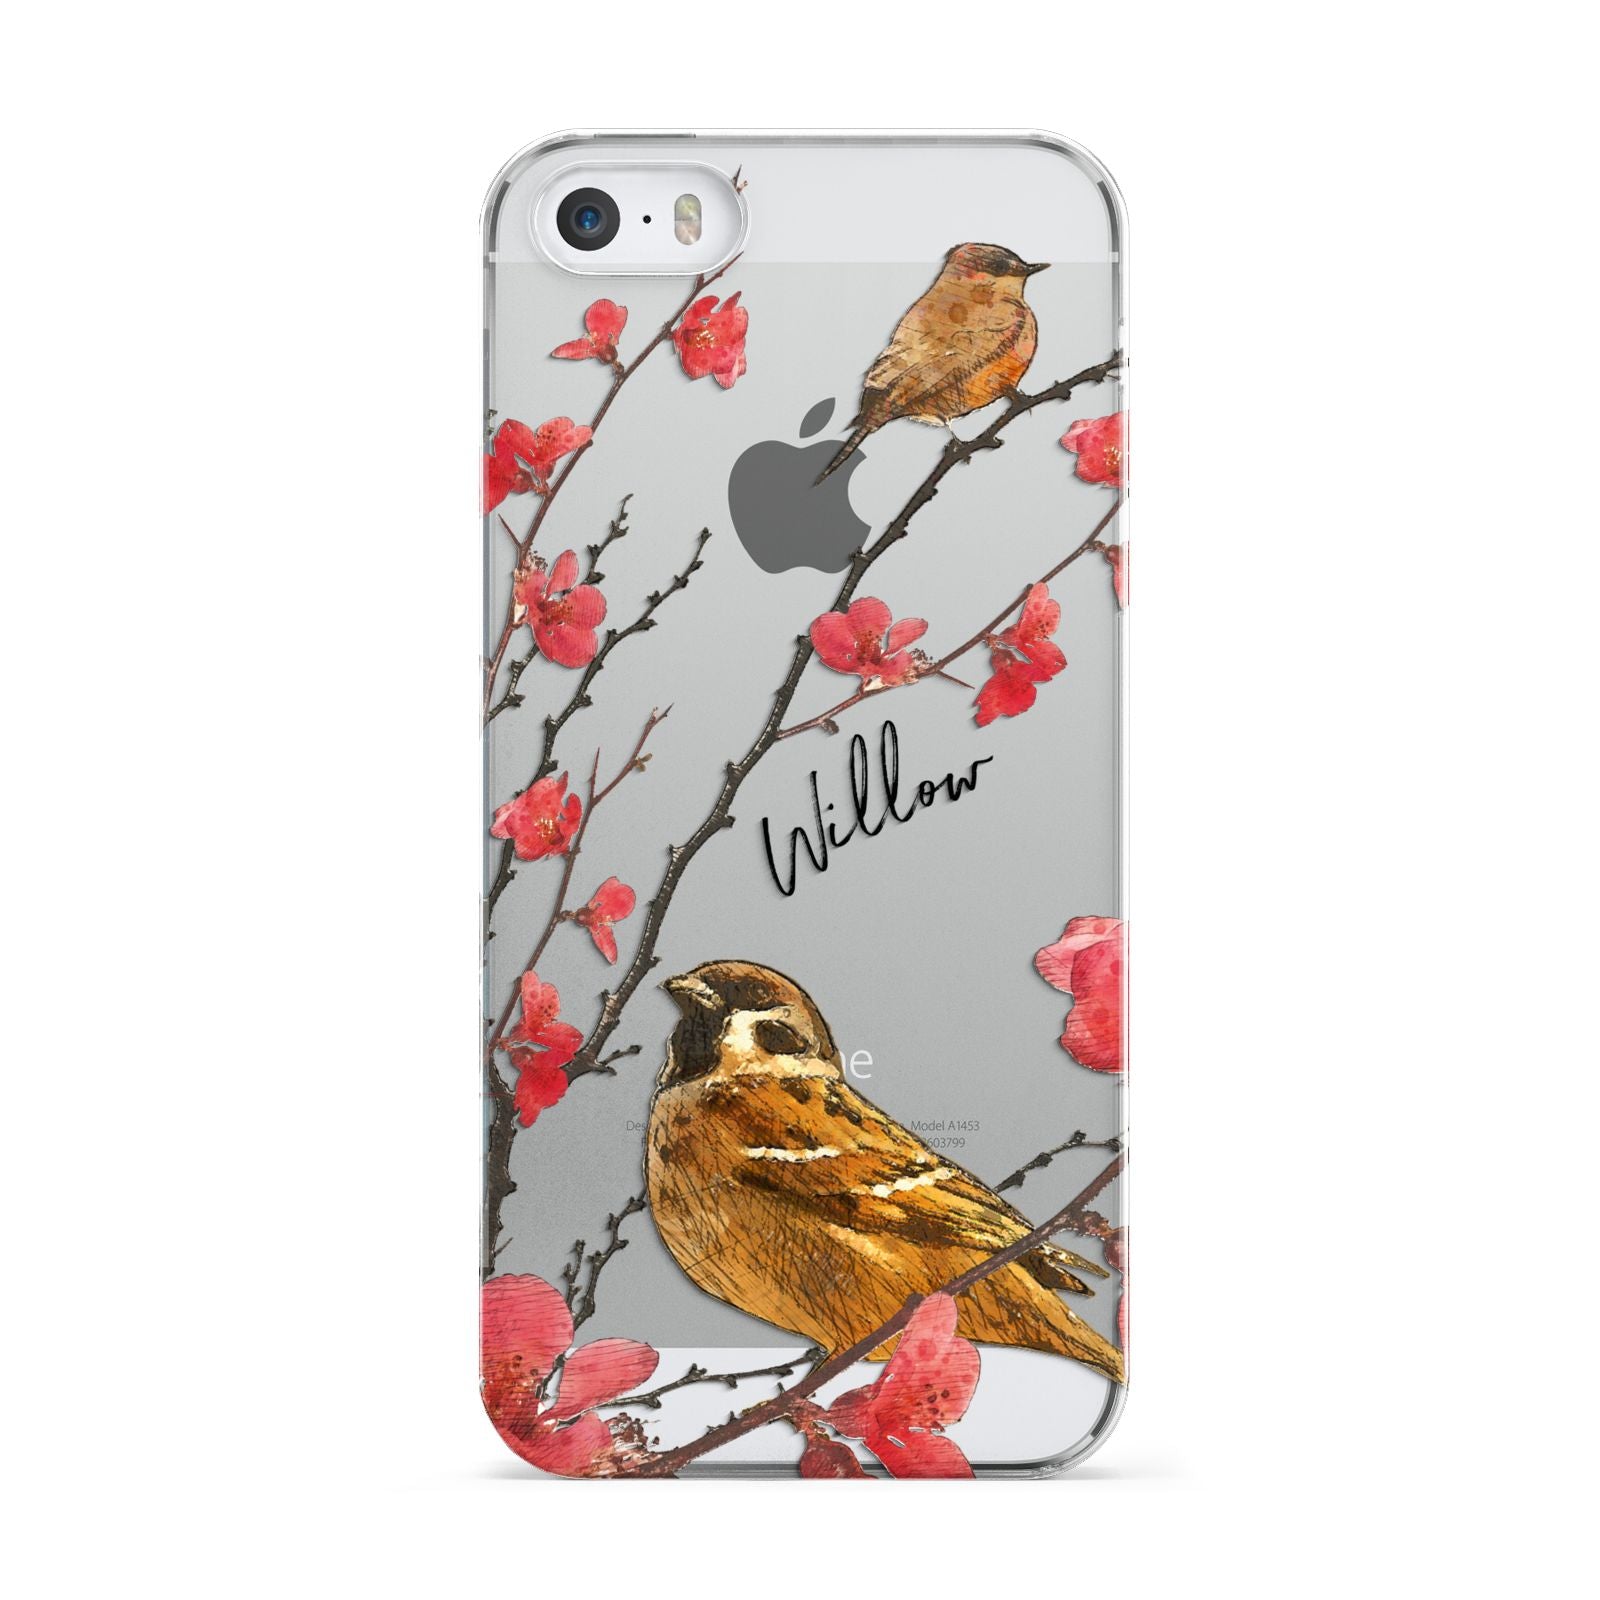 Personalised Birds Apple iPhone 5 Case